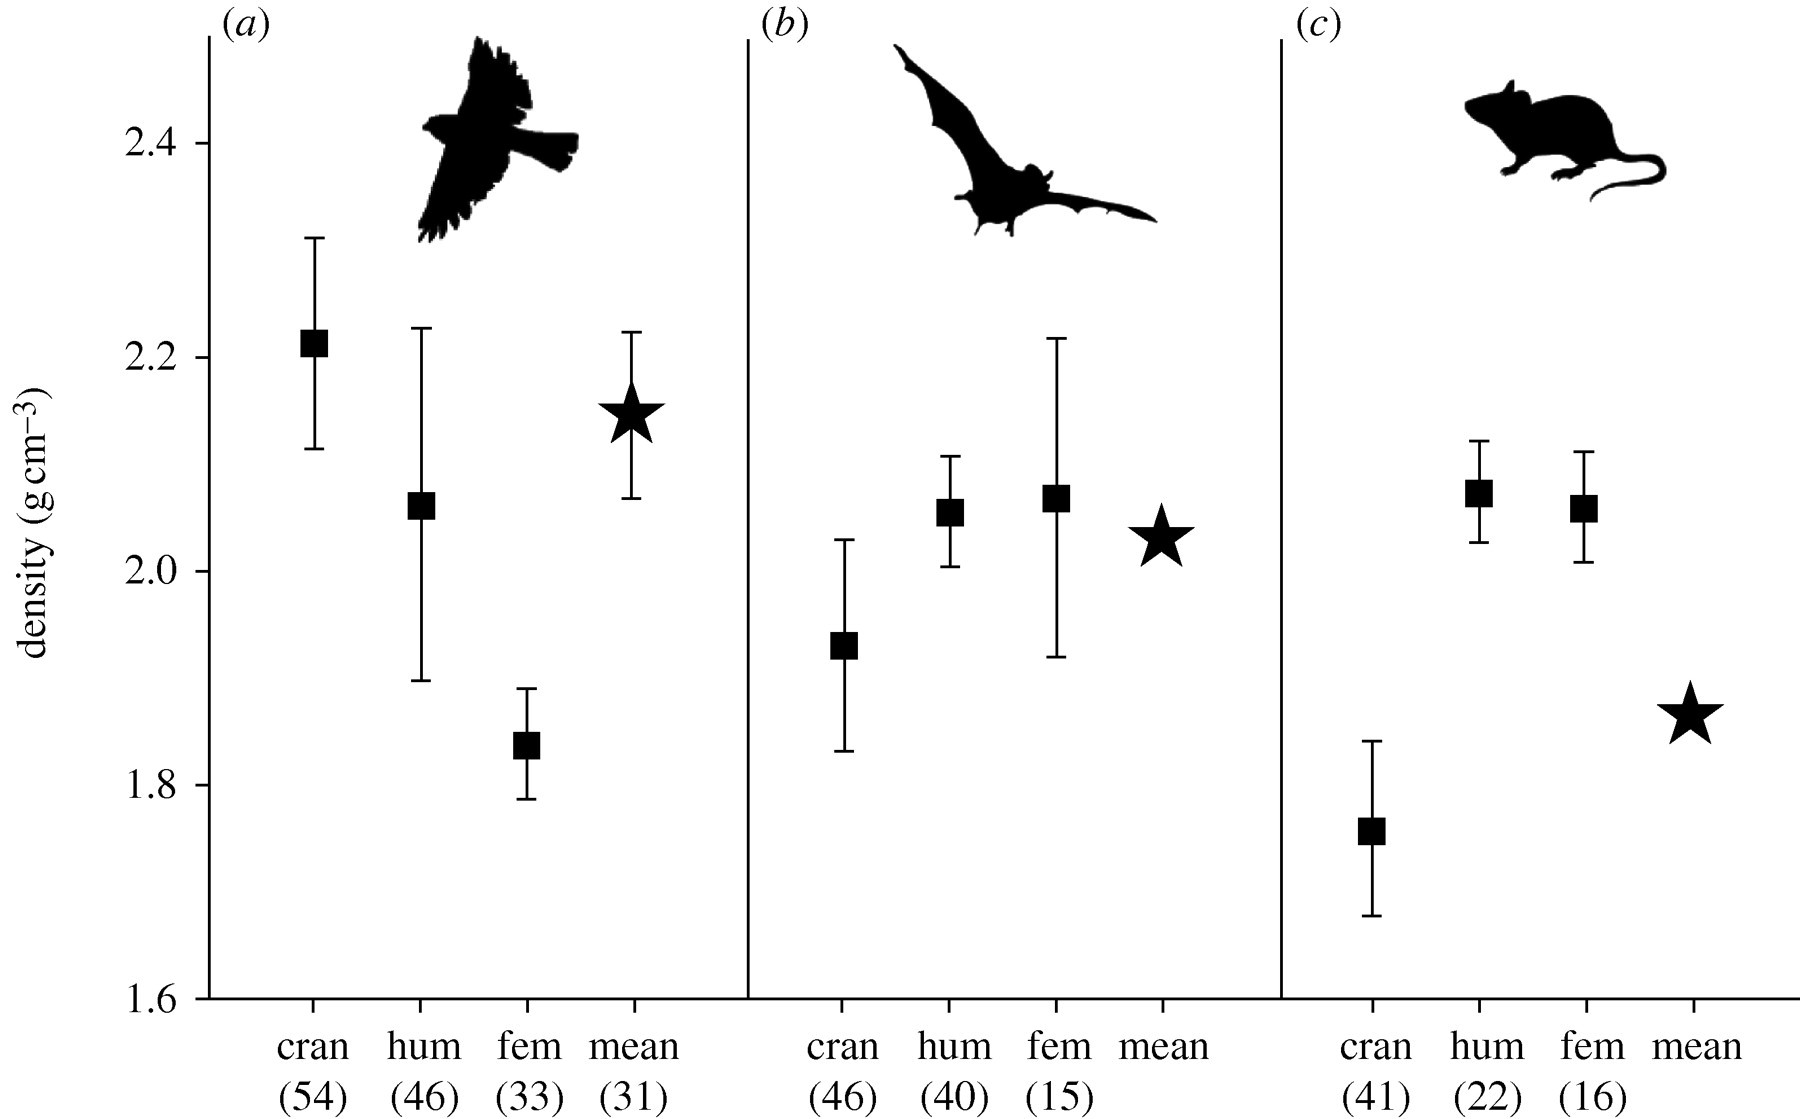 Do birds have low bone density?